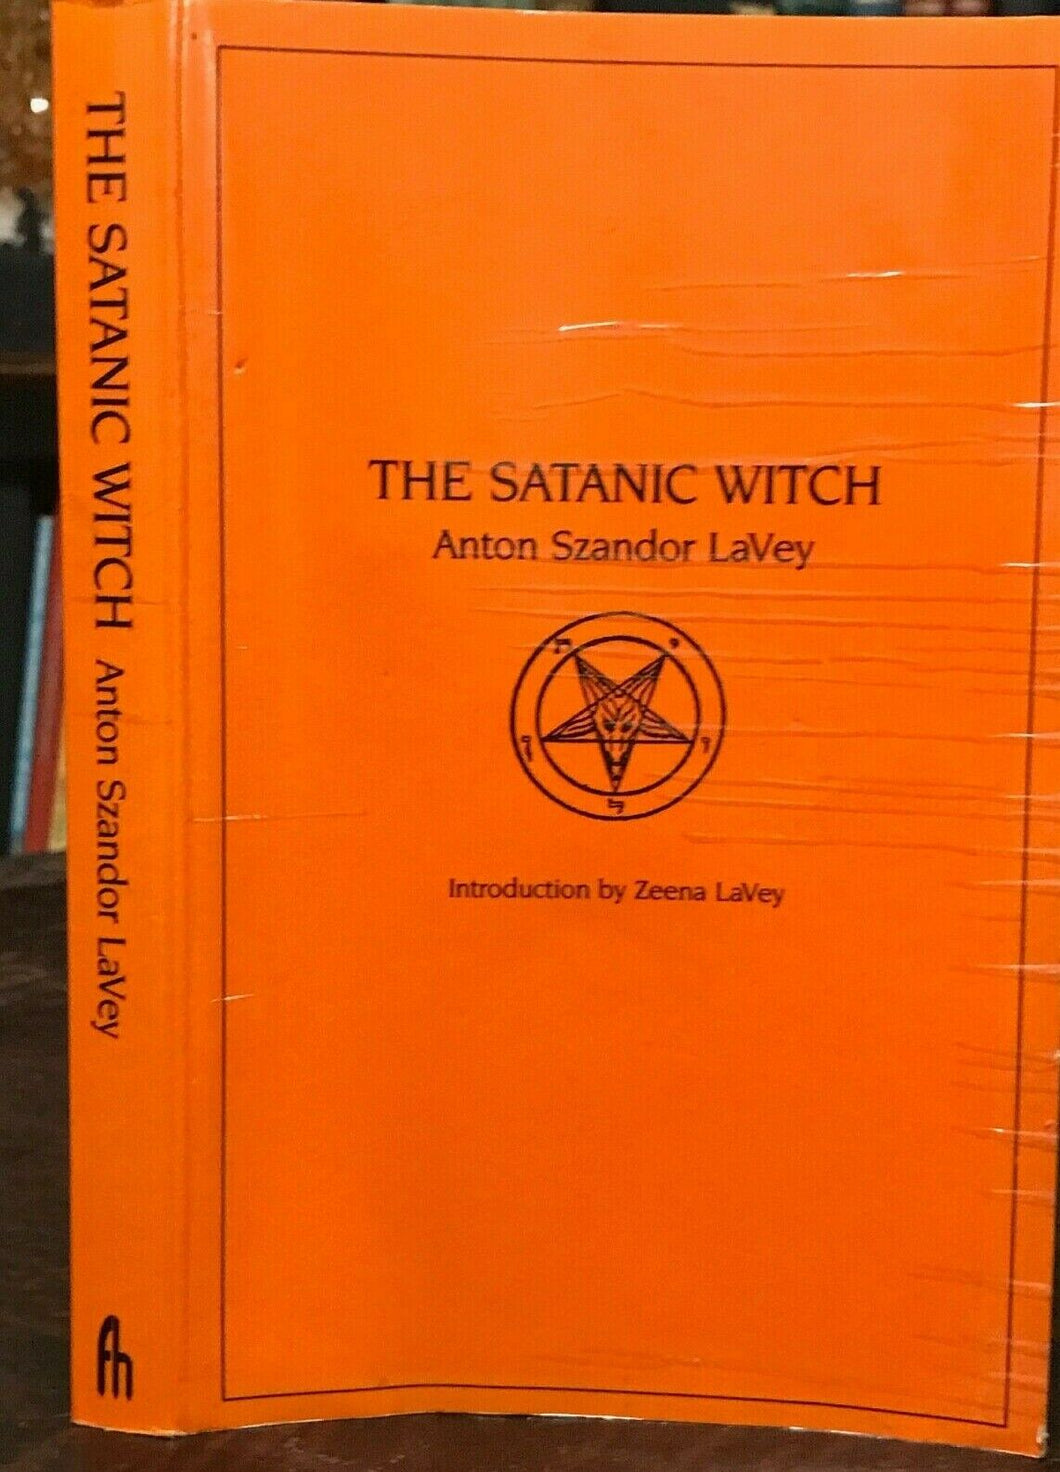 THE SATANIC WITCH - ANTON SZANDOR LAVEY - Feral House, 1989 CHURCH OF SATAN